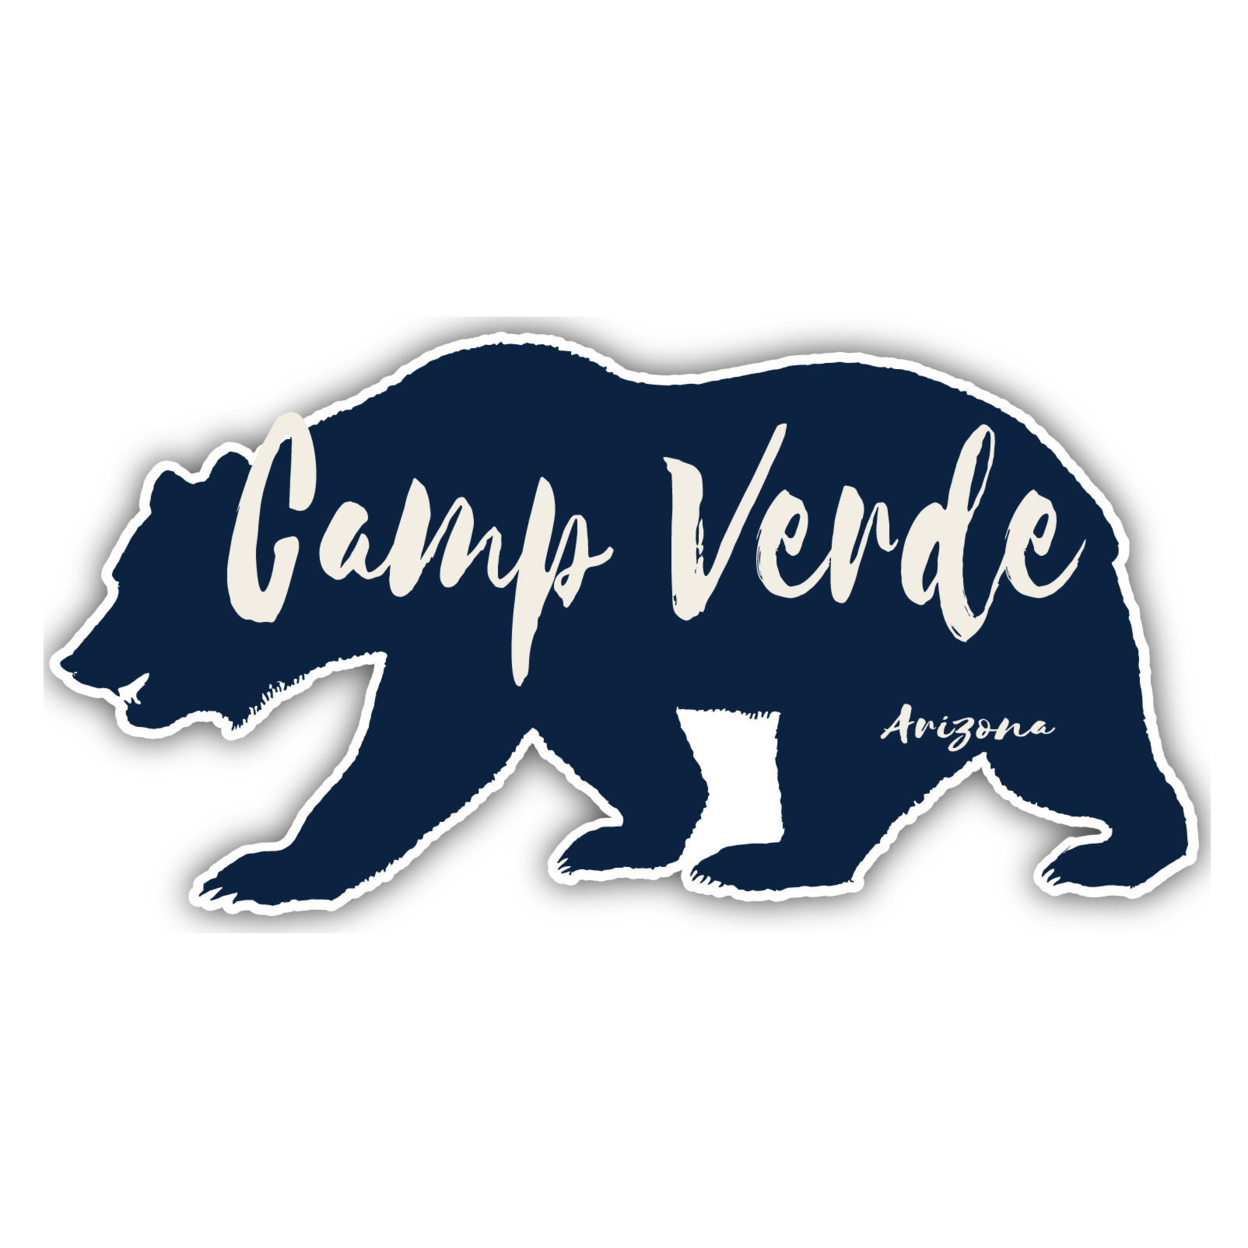 Camp Verde Arizona Souvenir Decorative Stickers (Choose Theme And Size) - Single Unit, 12-Inch, Tent